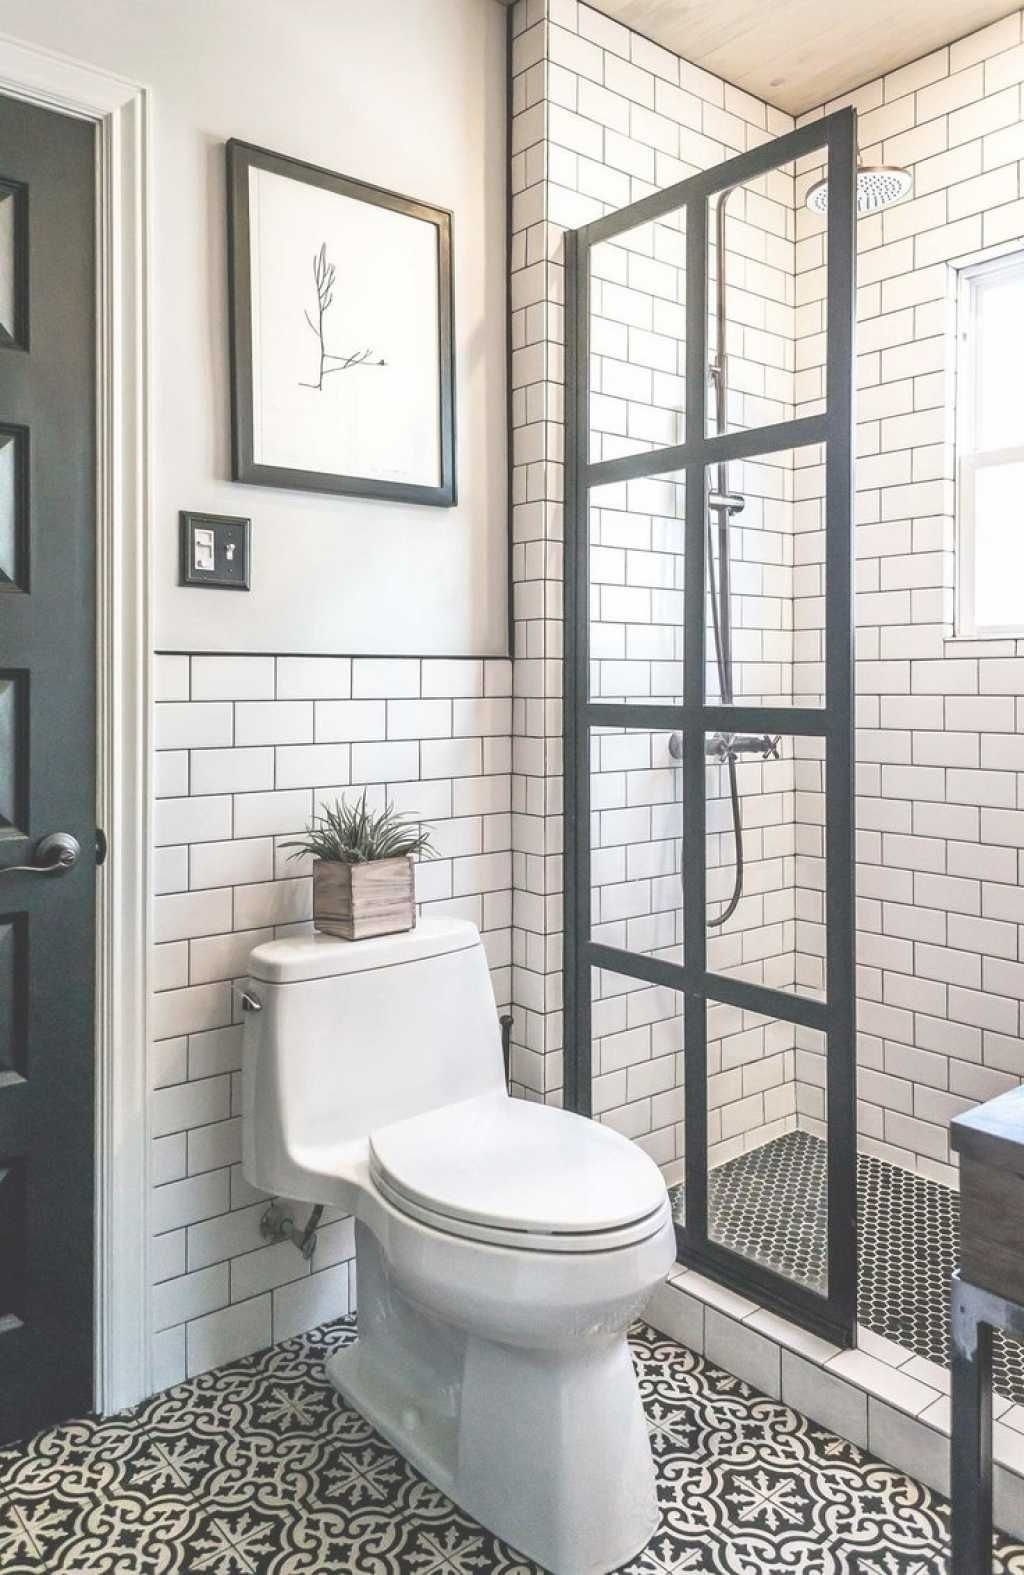 10 Cute Small Bathroom Ideas On A Budget 50 small master bathroom makeover ideas on a budget http 3 2022